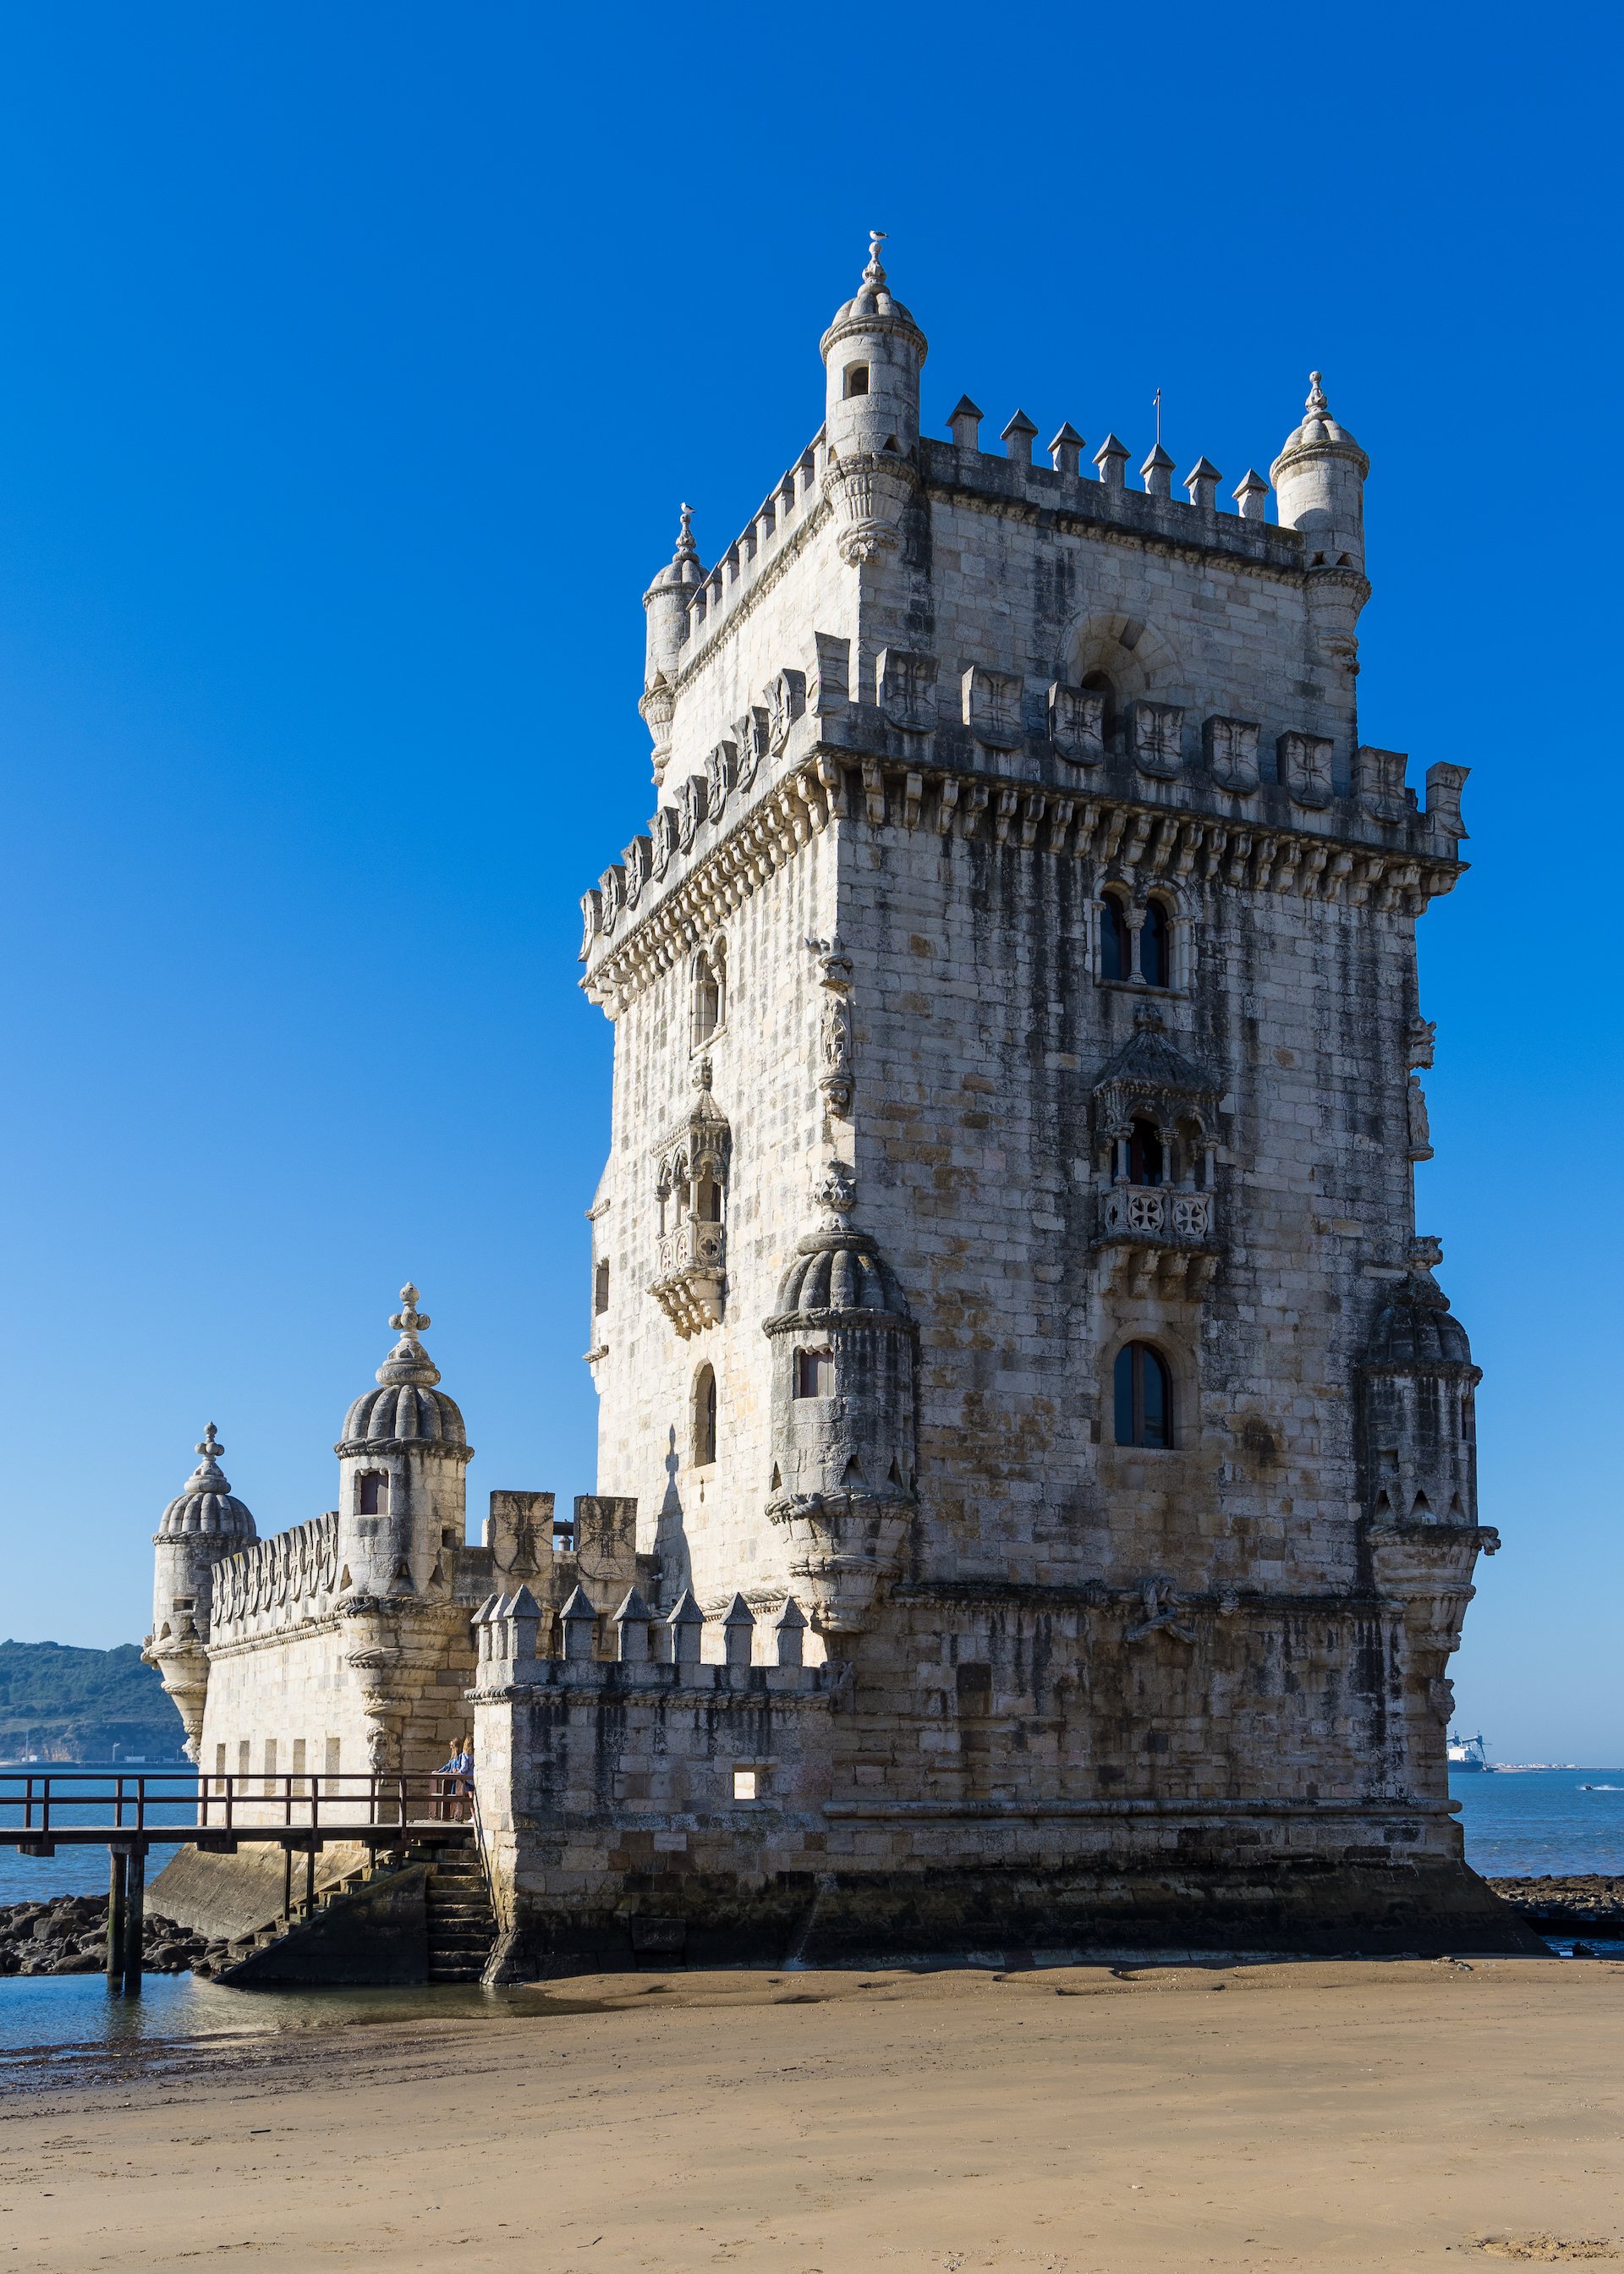  Torre de Belém 